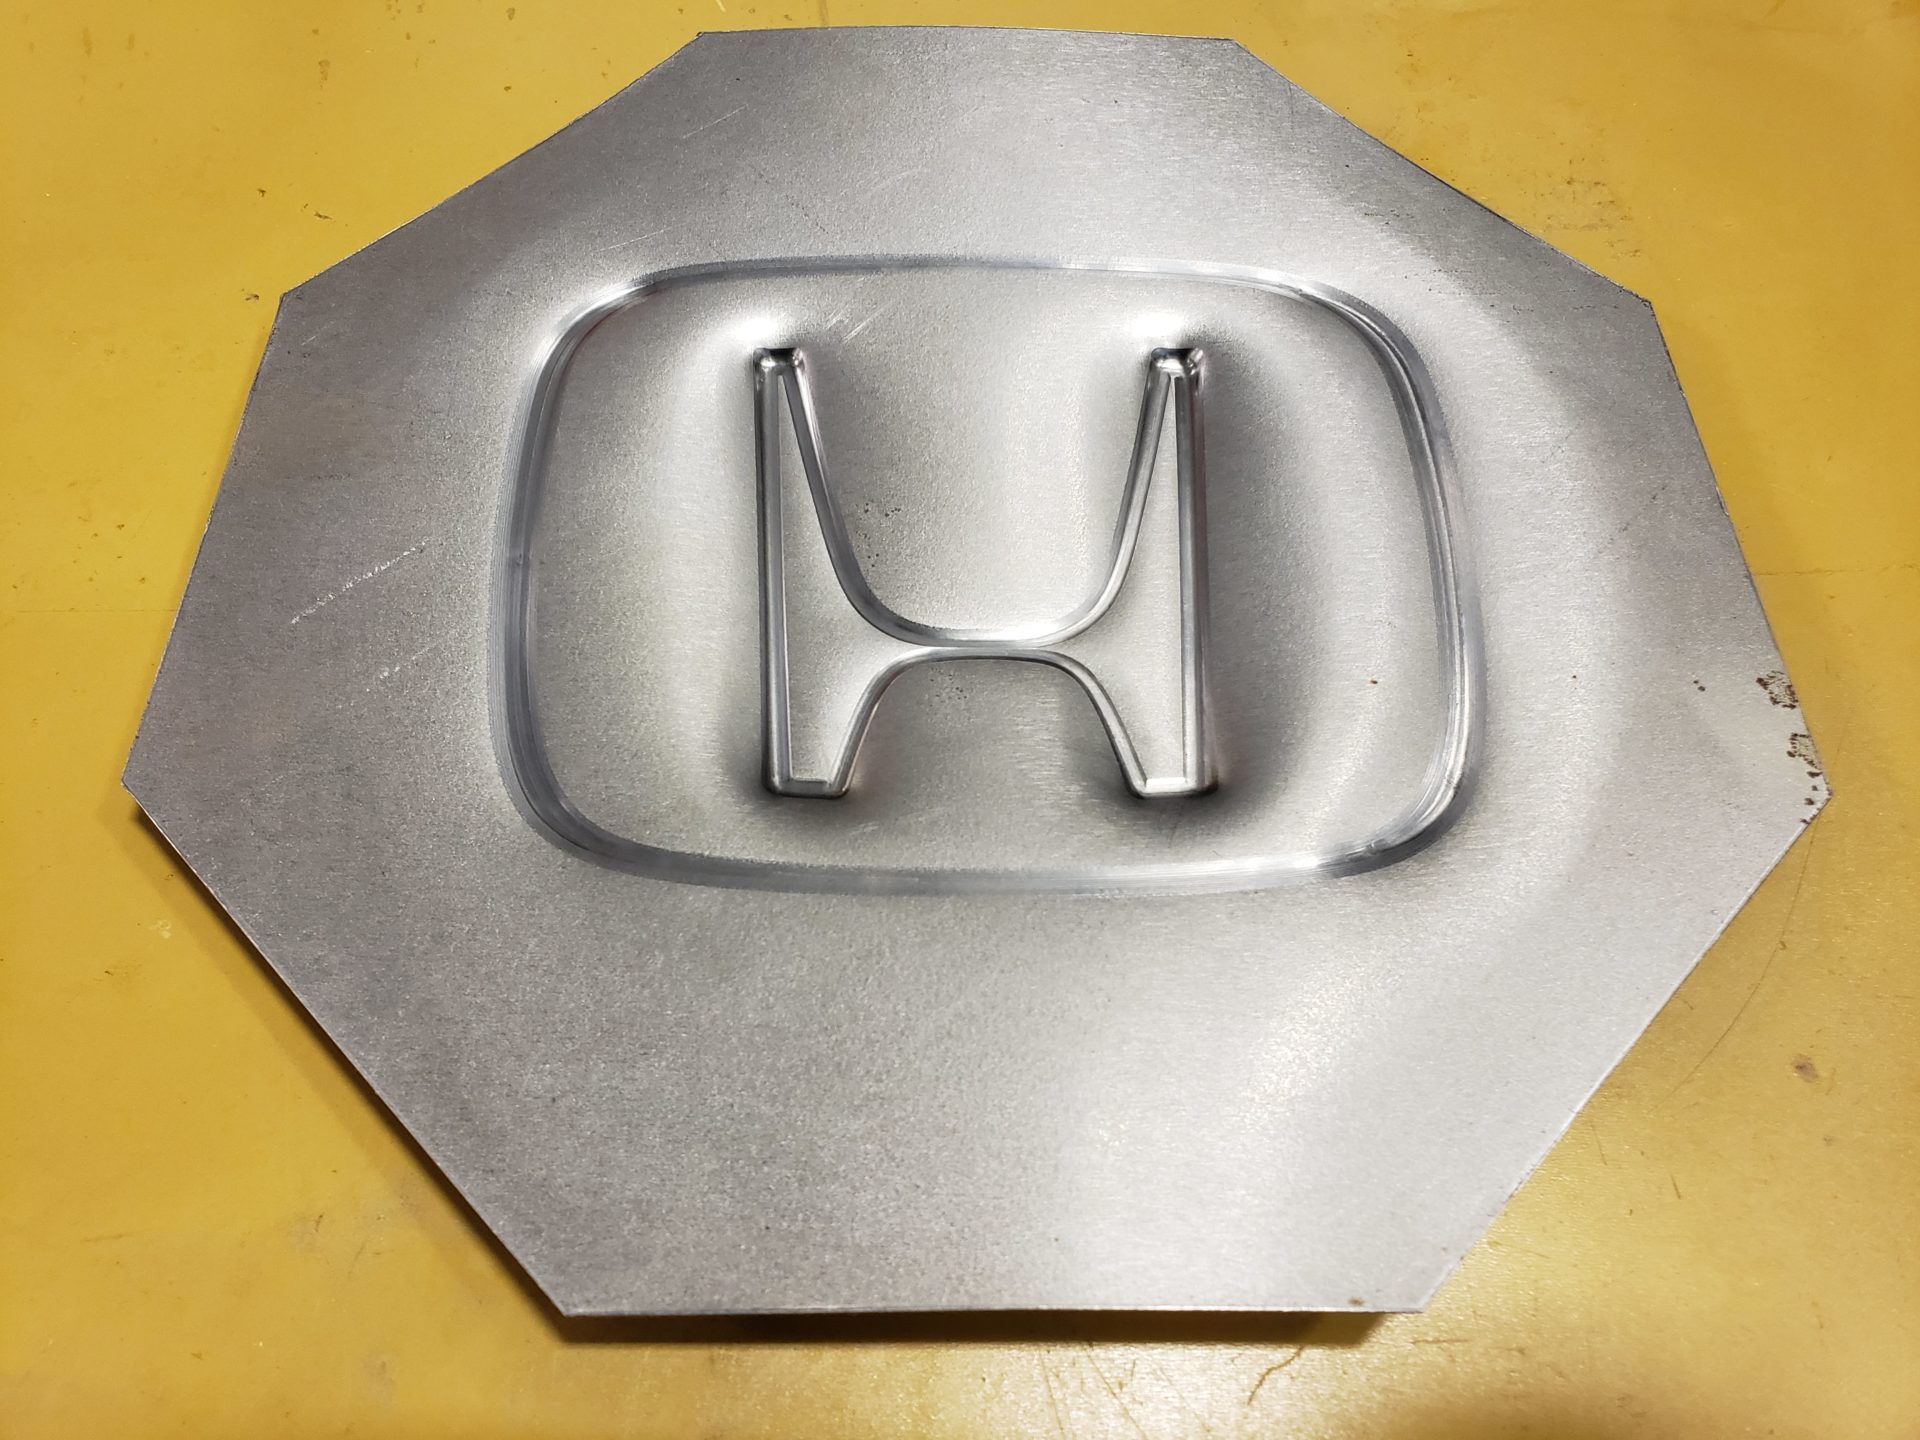 Incrementally formed Honda logo